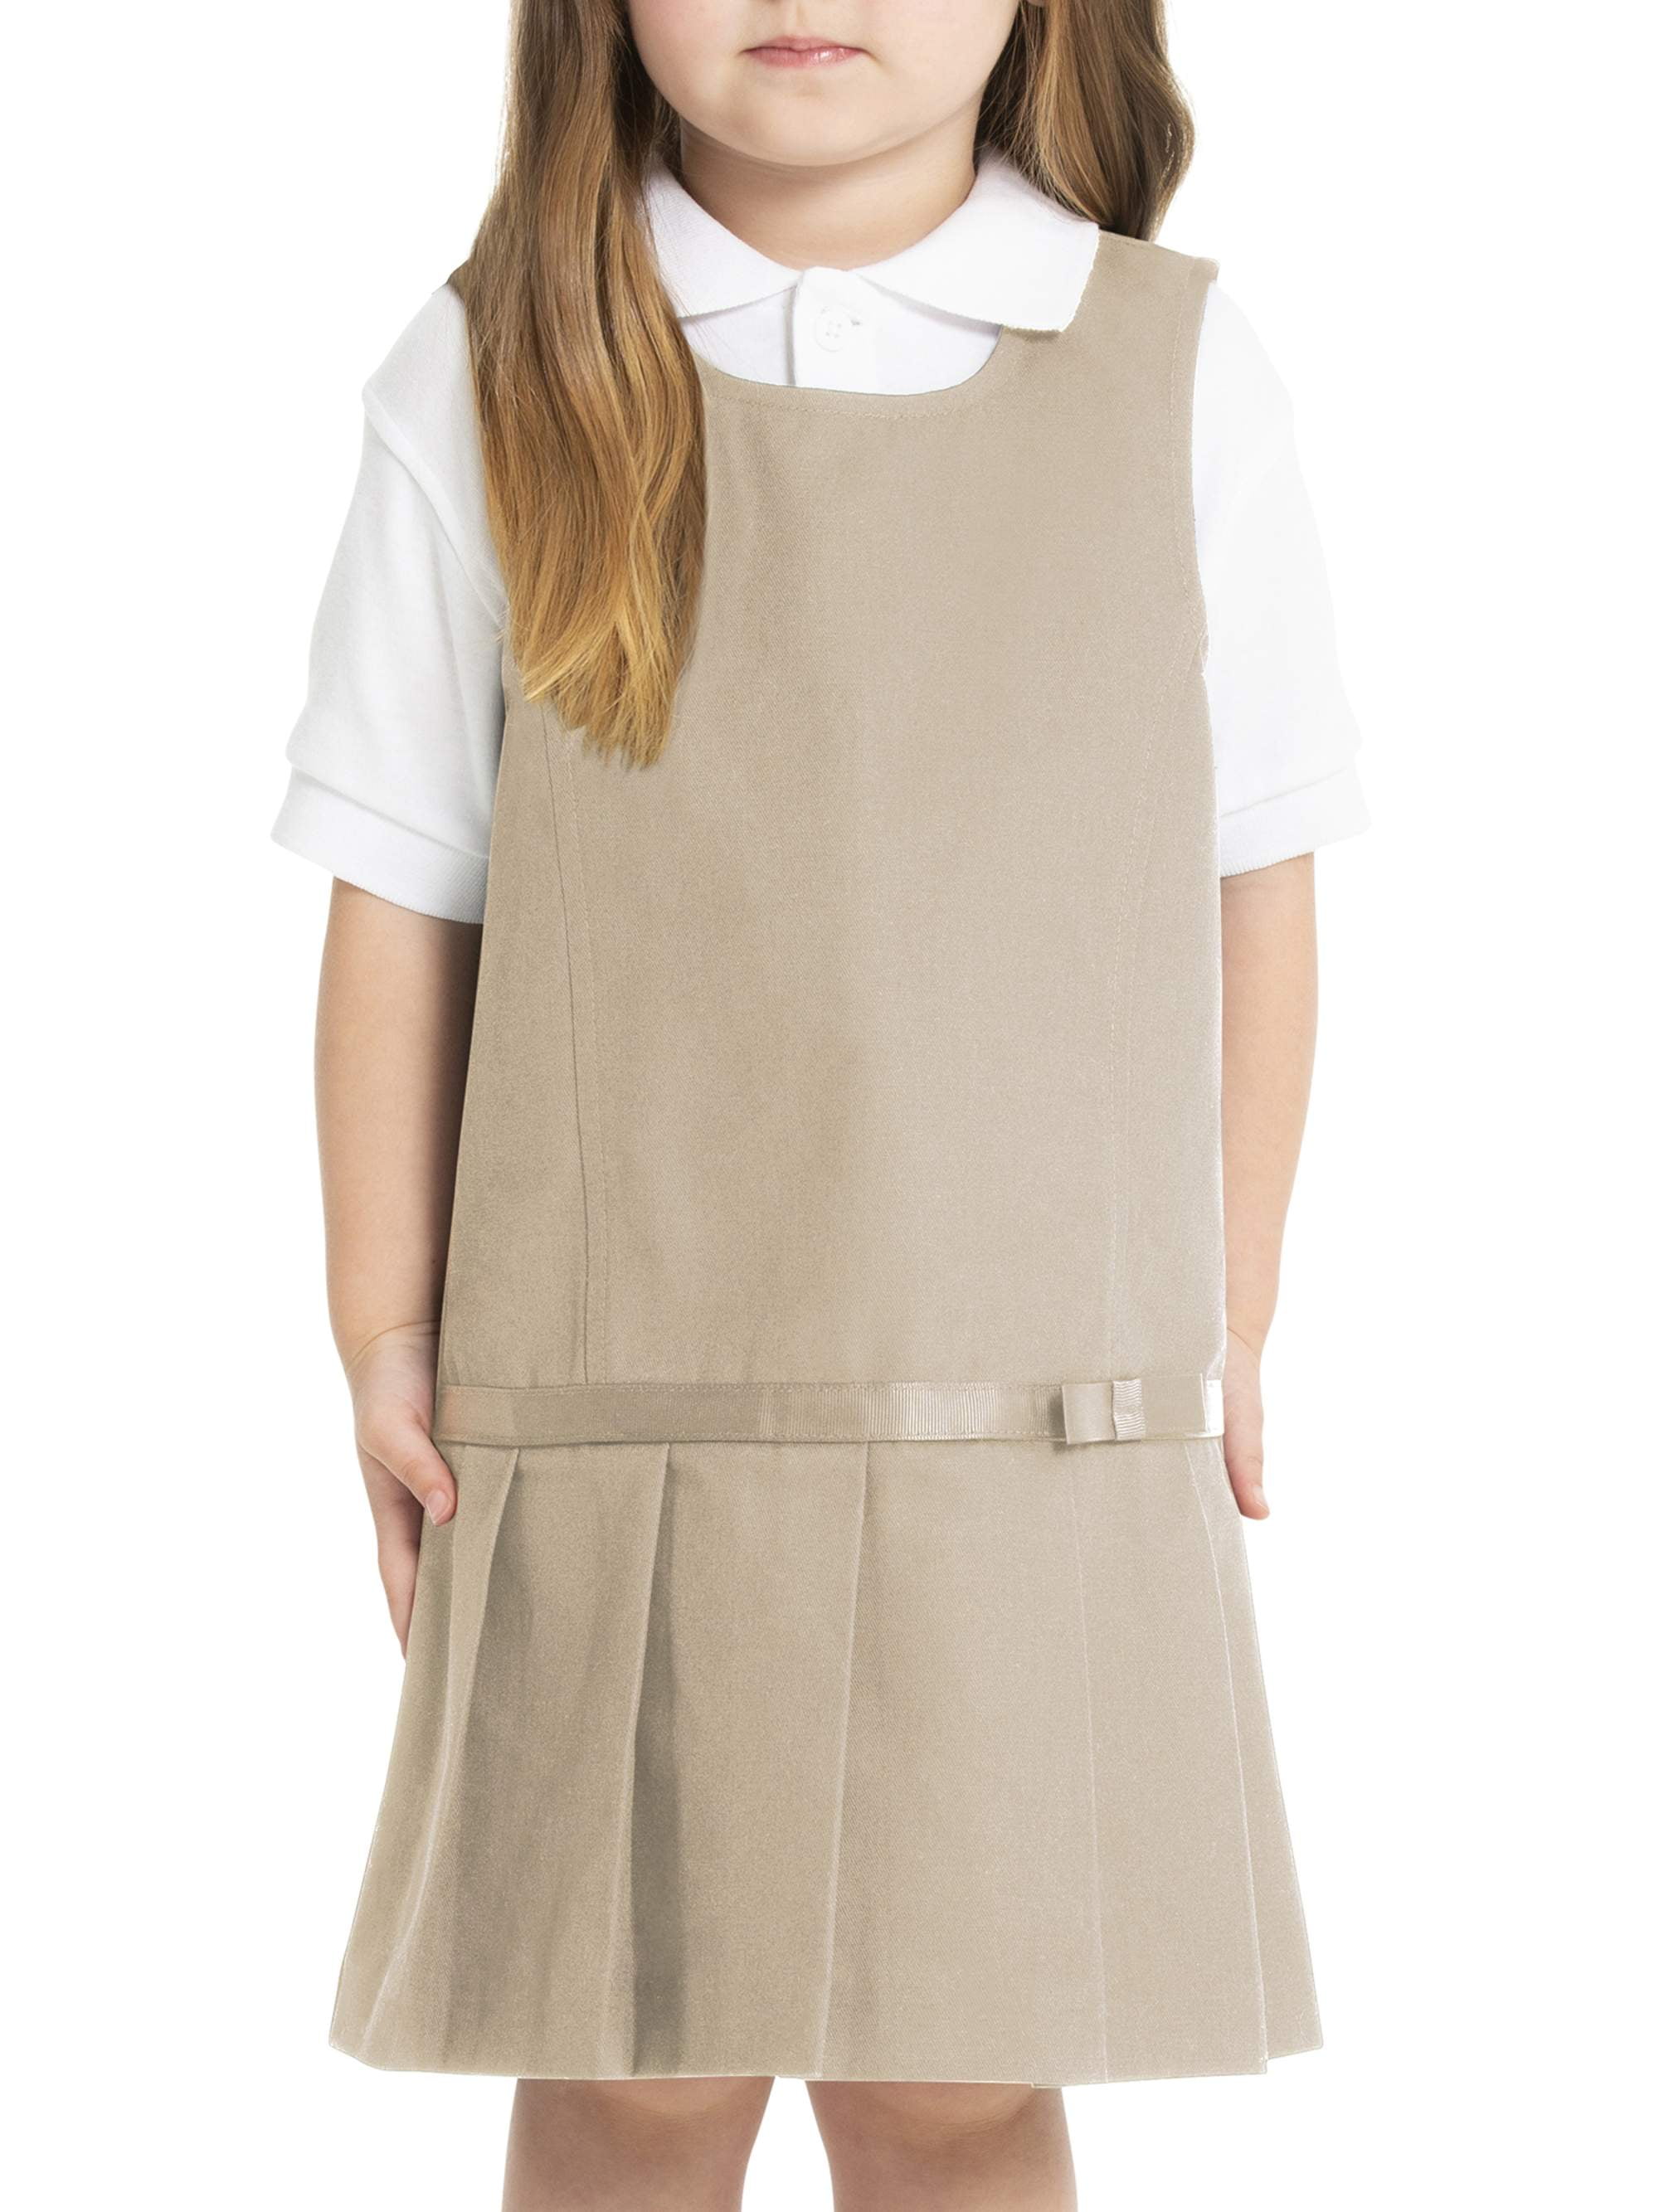 unik Girl Pleated Uniform Skirt Scooter Size 5-16 Navy Khaki Plaid